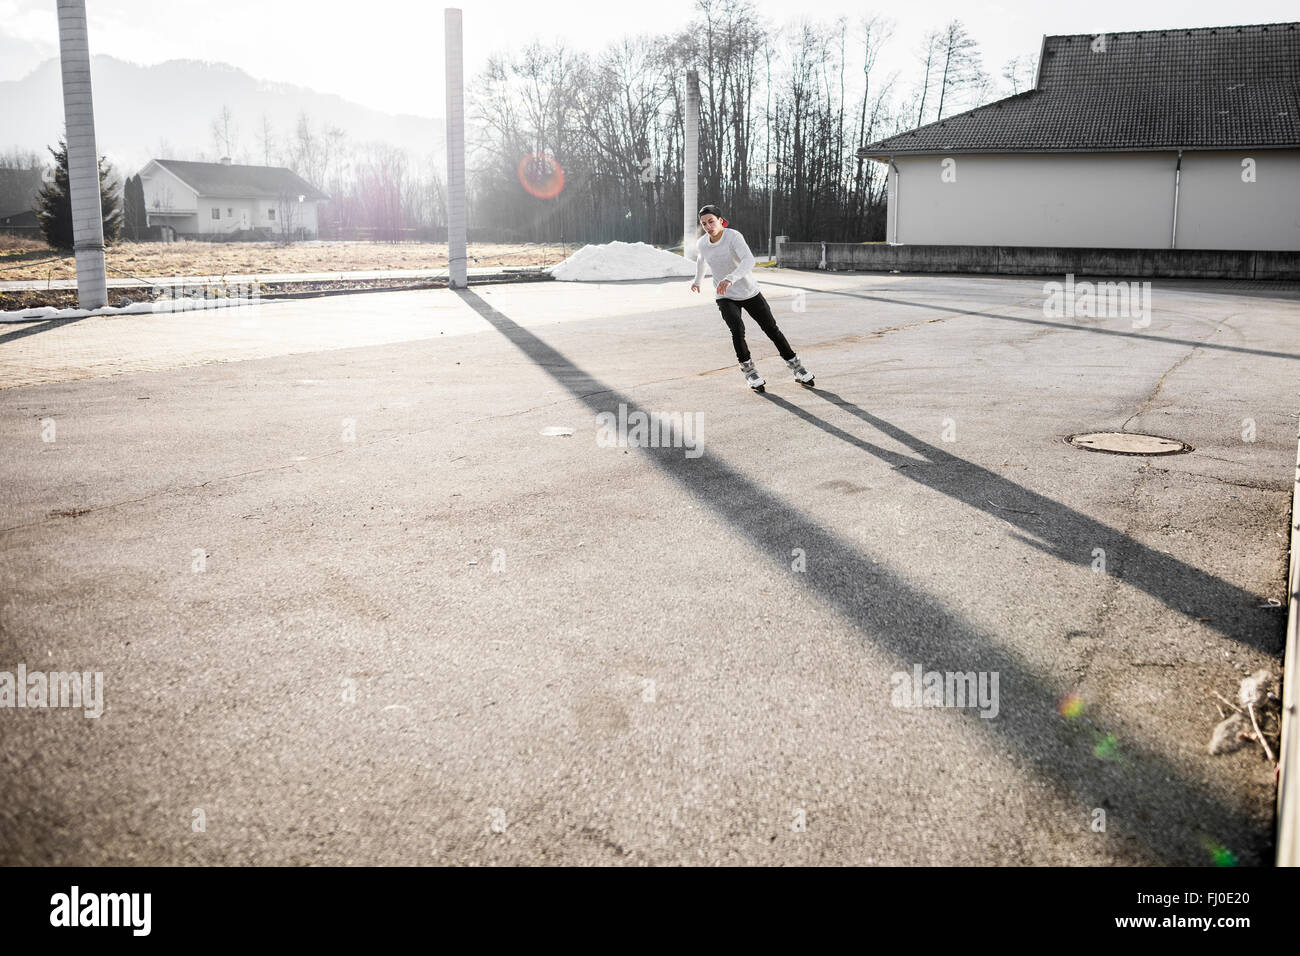 Young man inline skating Stock Photo